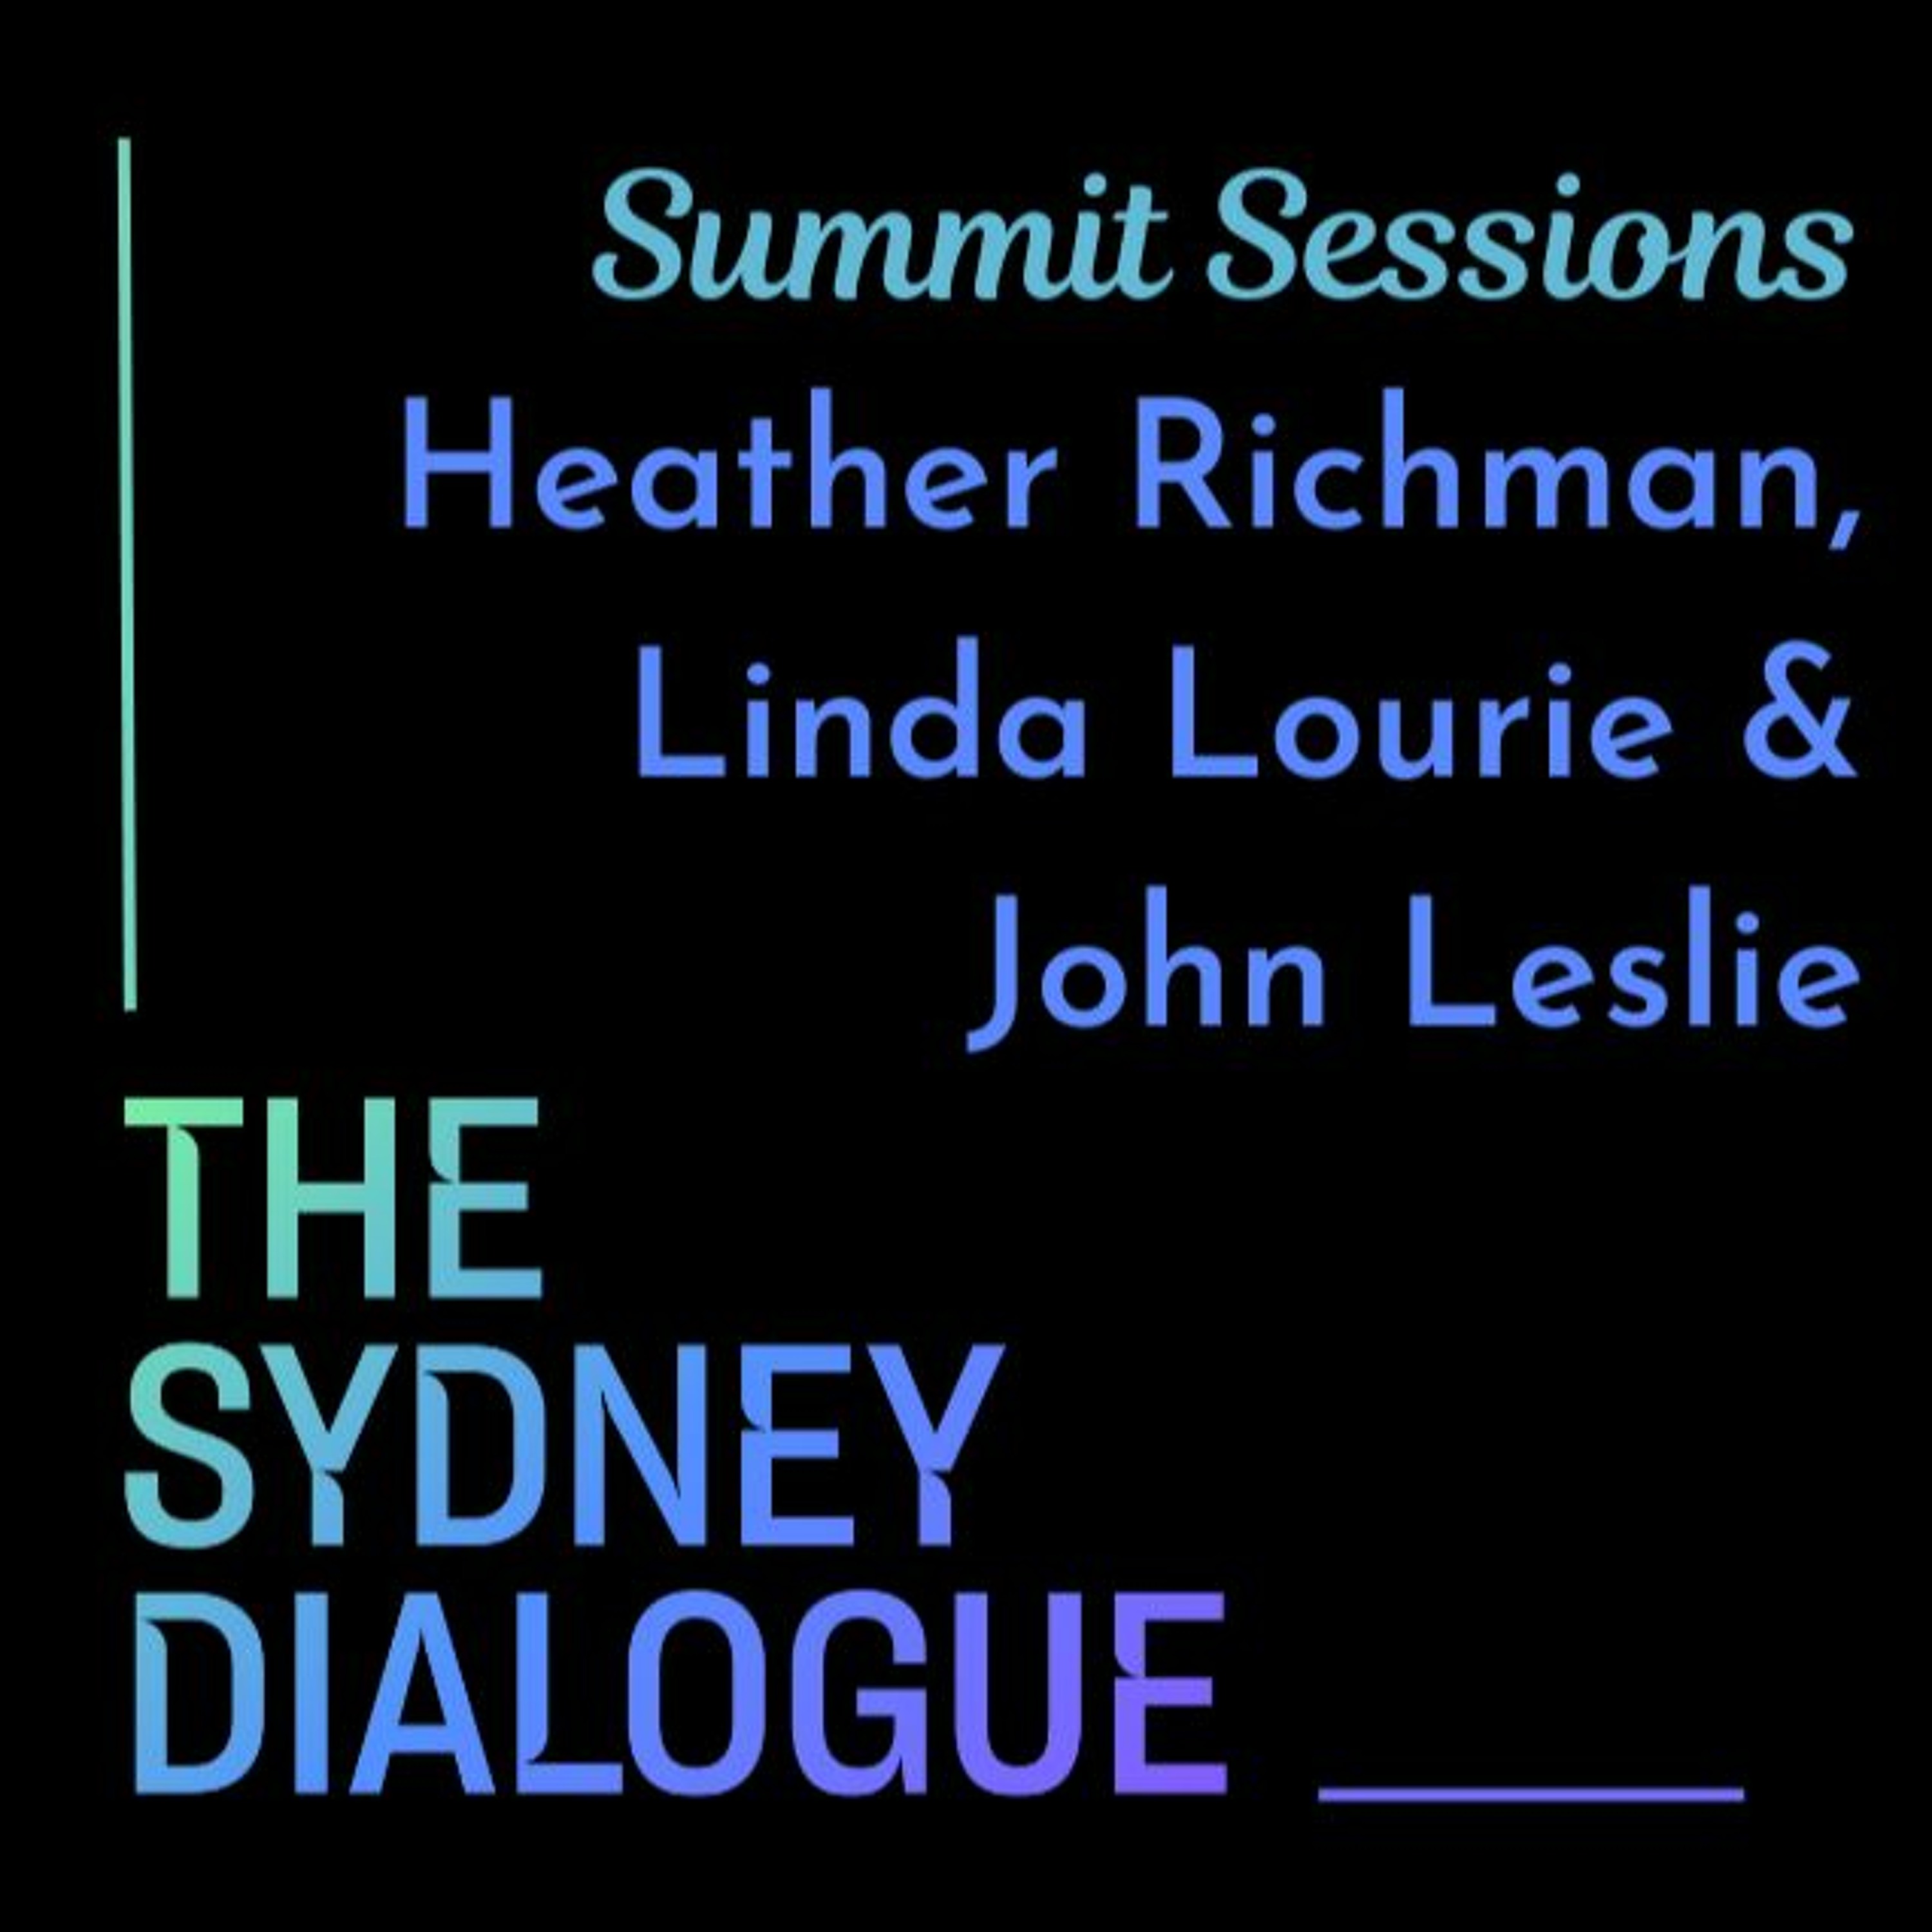 The Sydney Dialogue Summit Sessions: Heather Richman, Linda Lourie & John Leslie